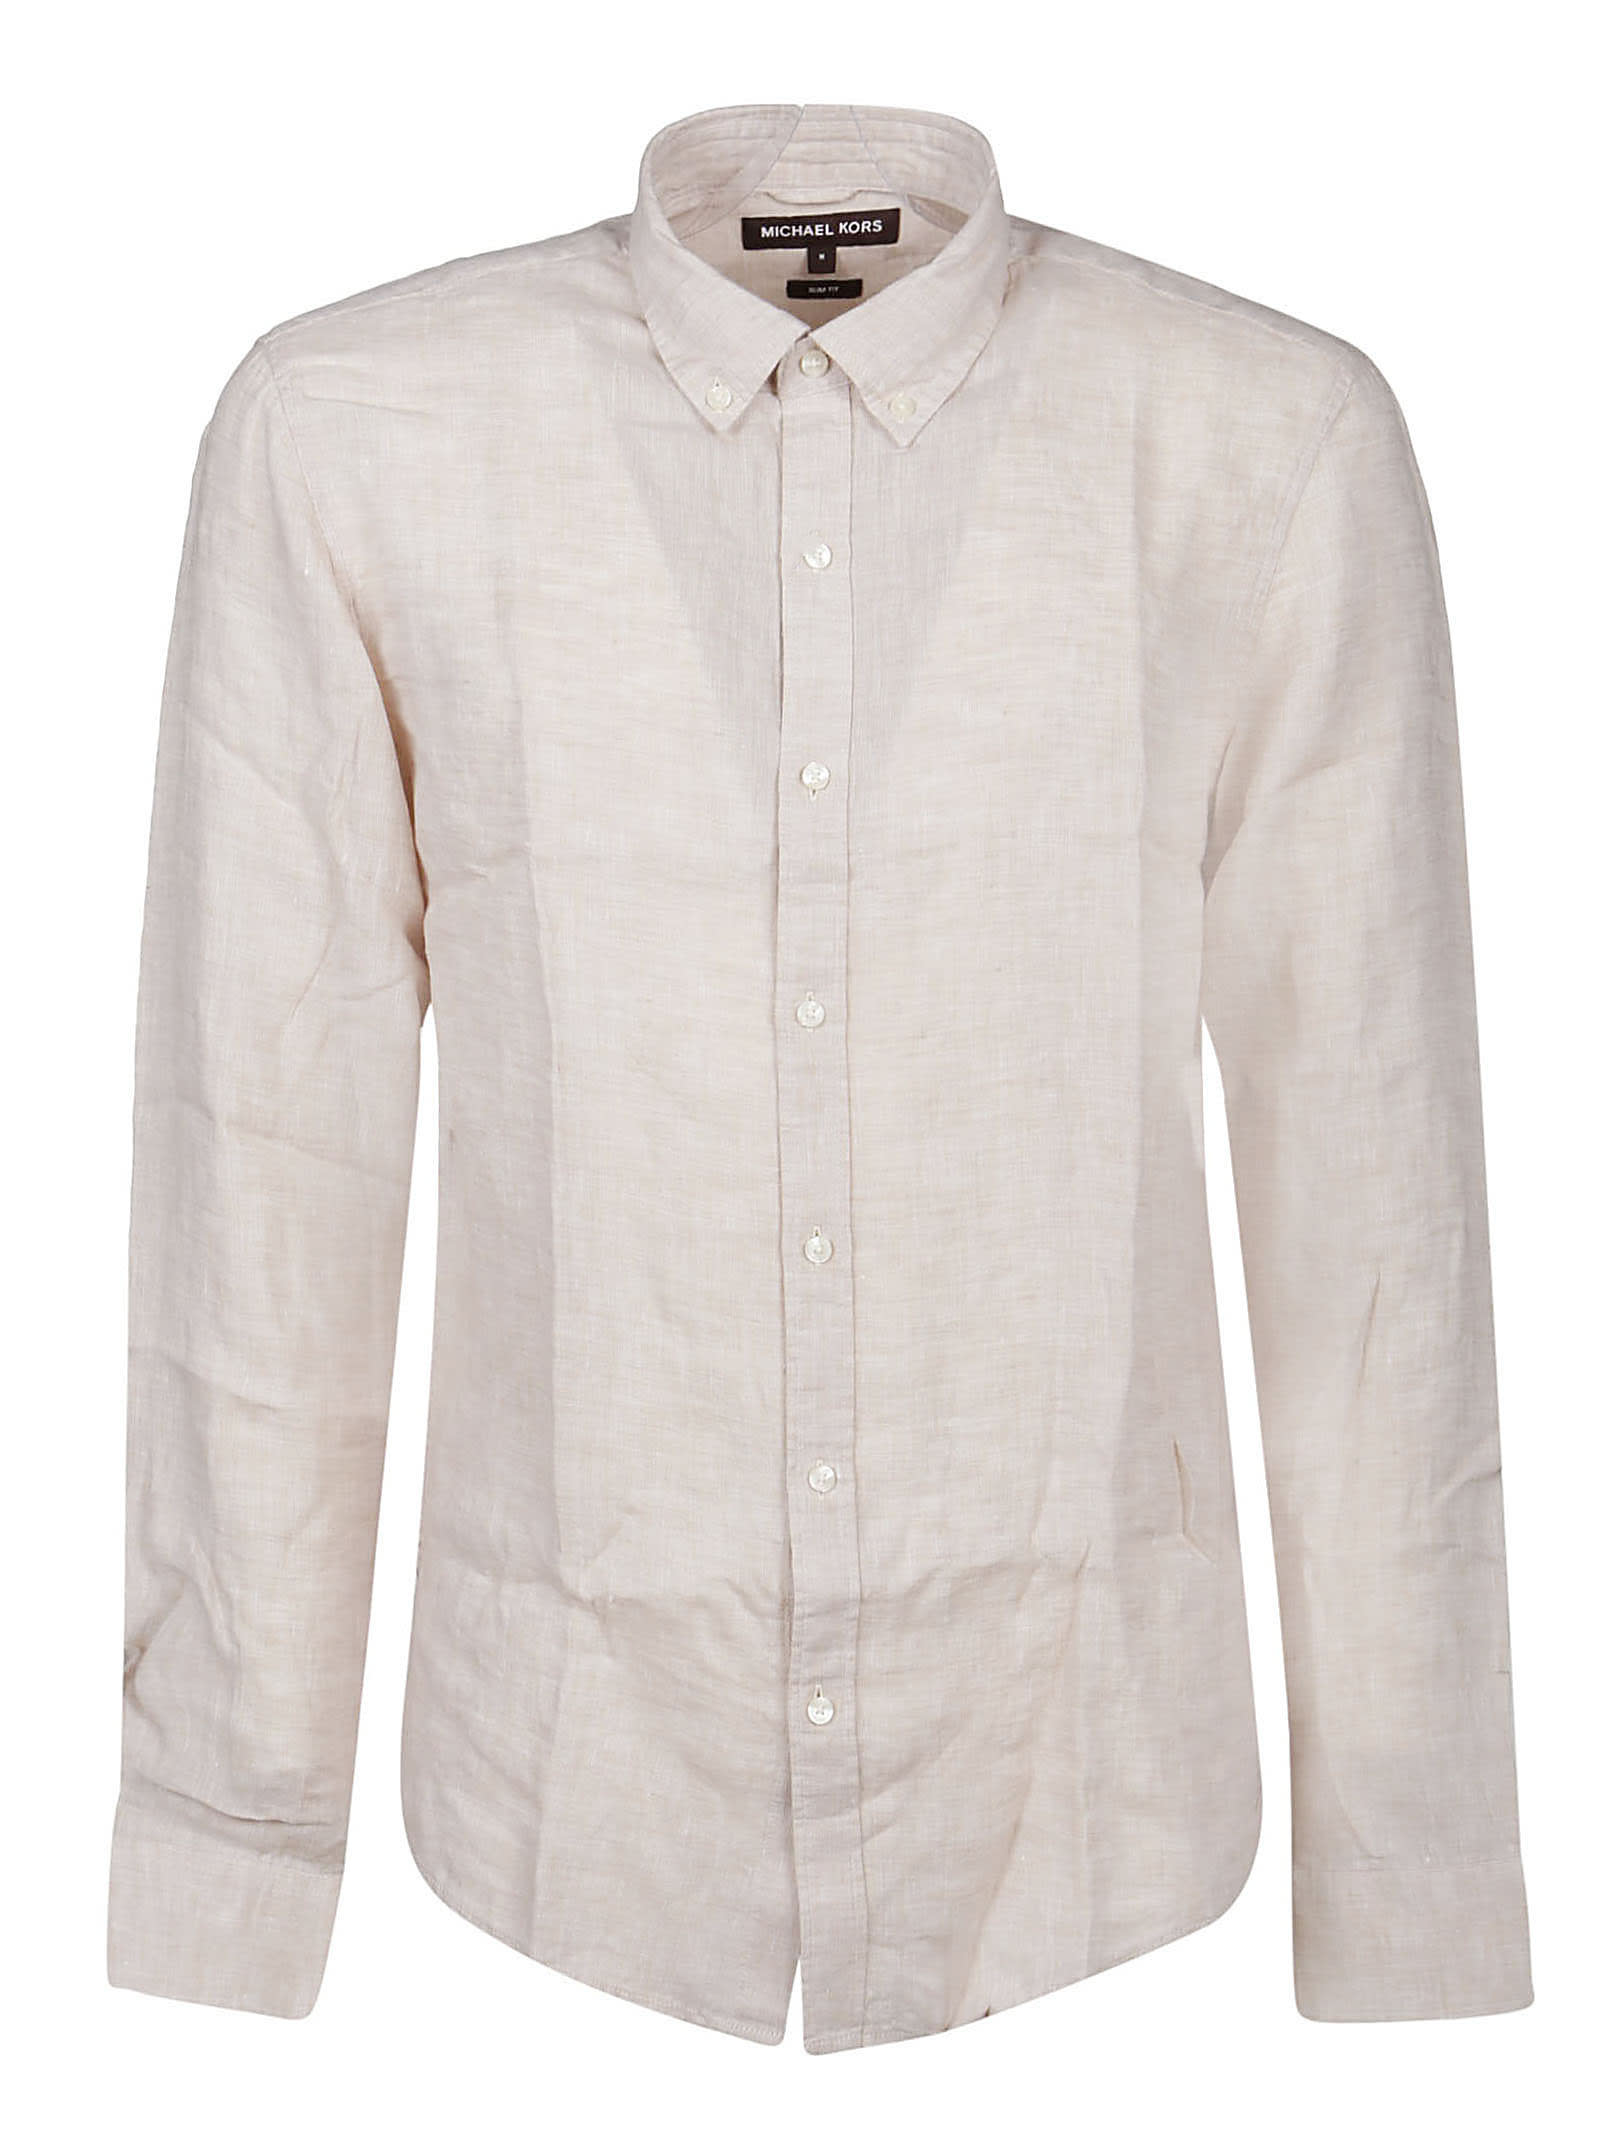 Michael Kors Long Sleeve Slim Fit Shirt